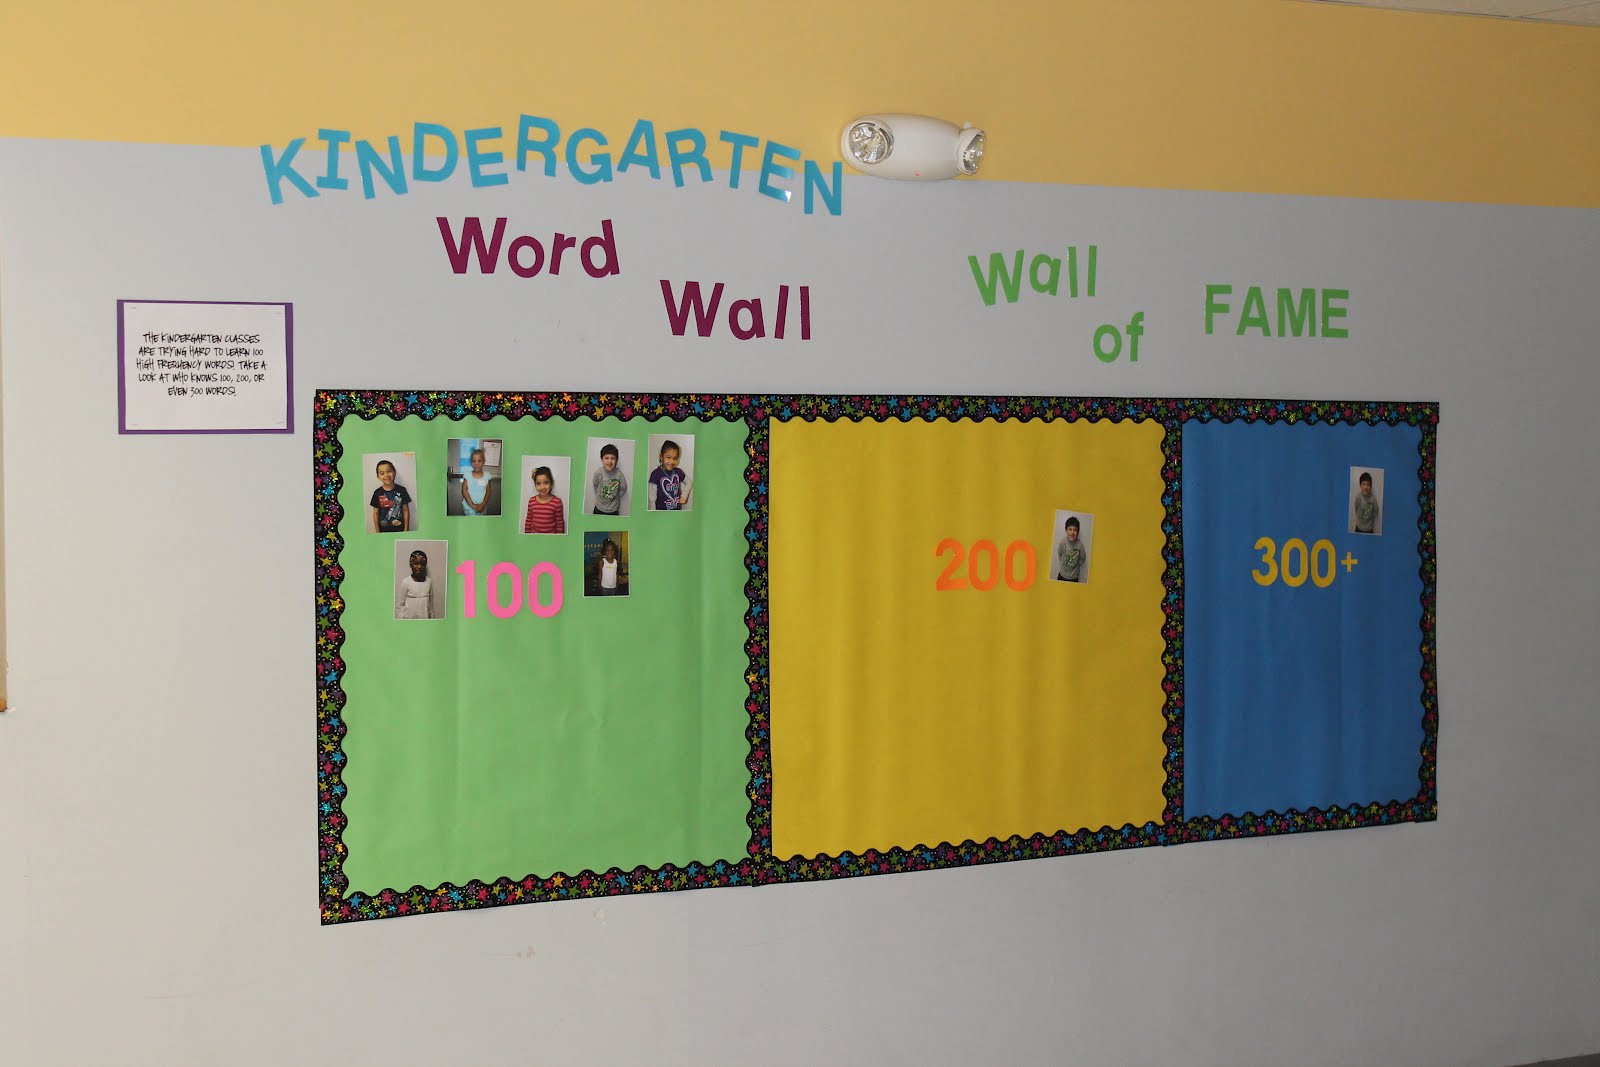 Wordwall english beginner. ABC Wordwall. Wall of Fame. Wordwall логопеду. Wonder Wall in the Kindergarten.